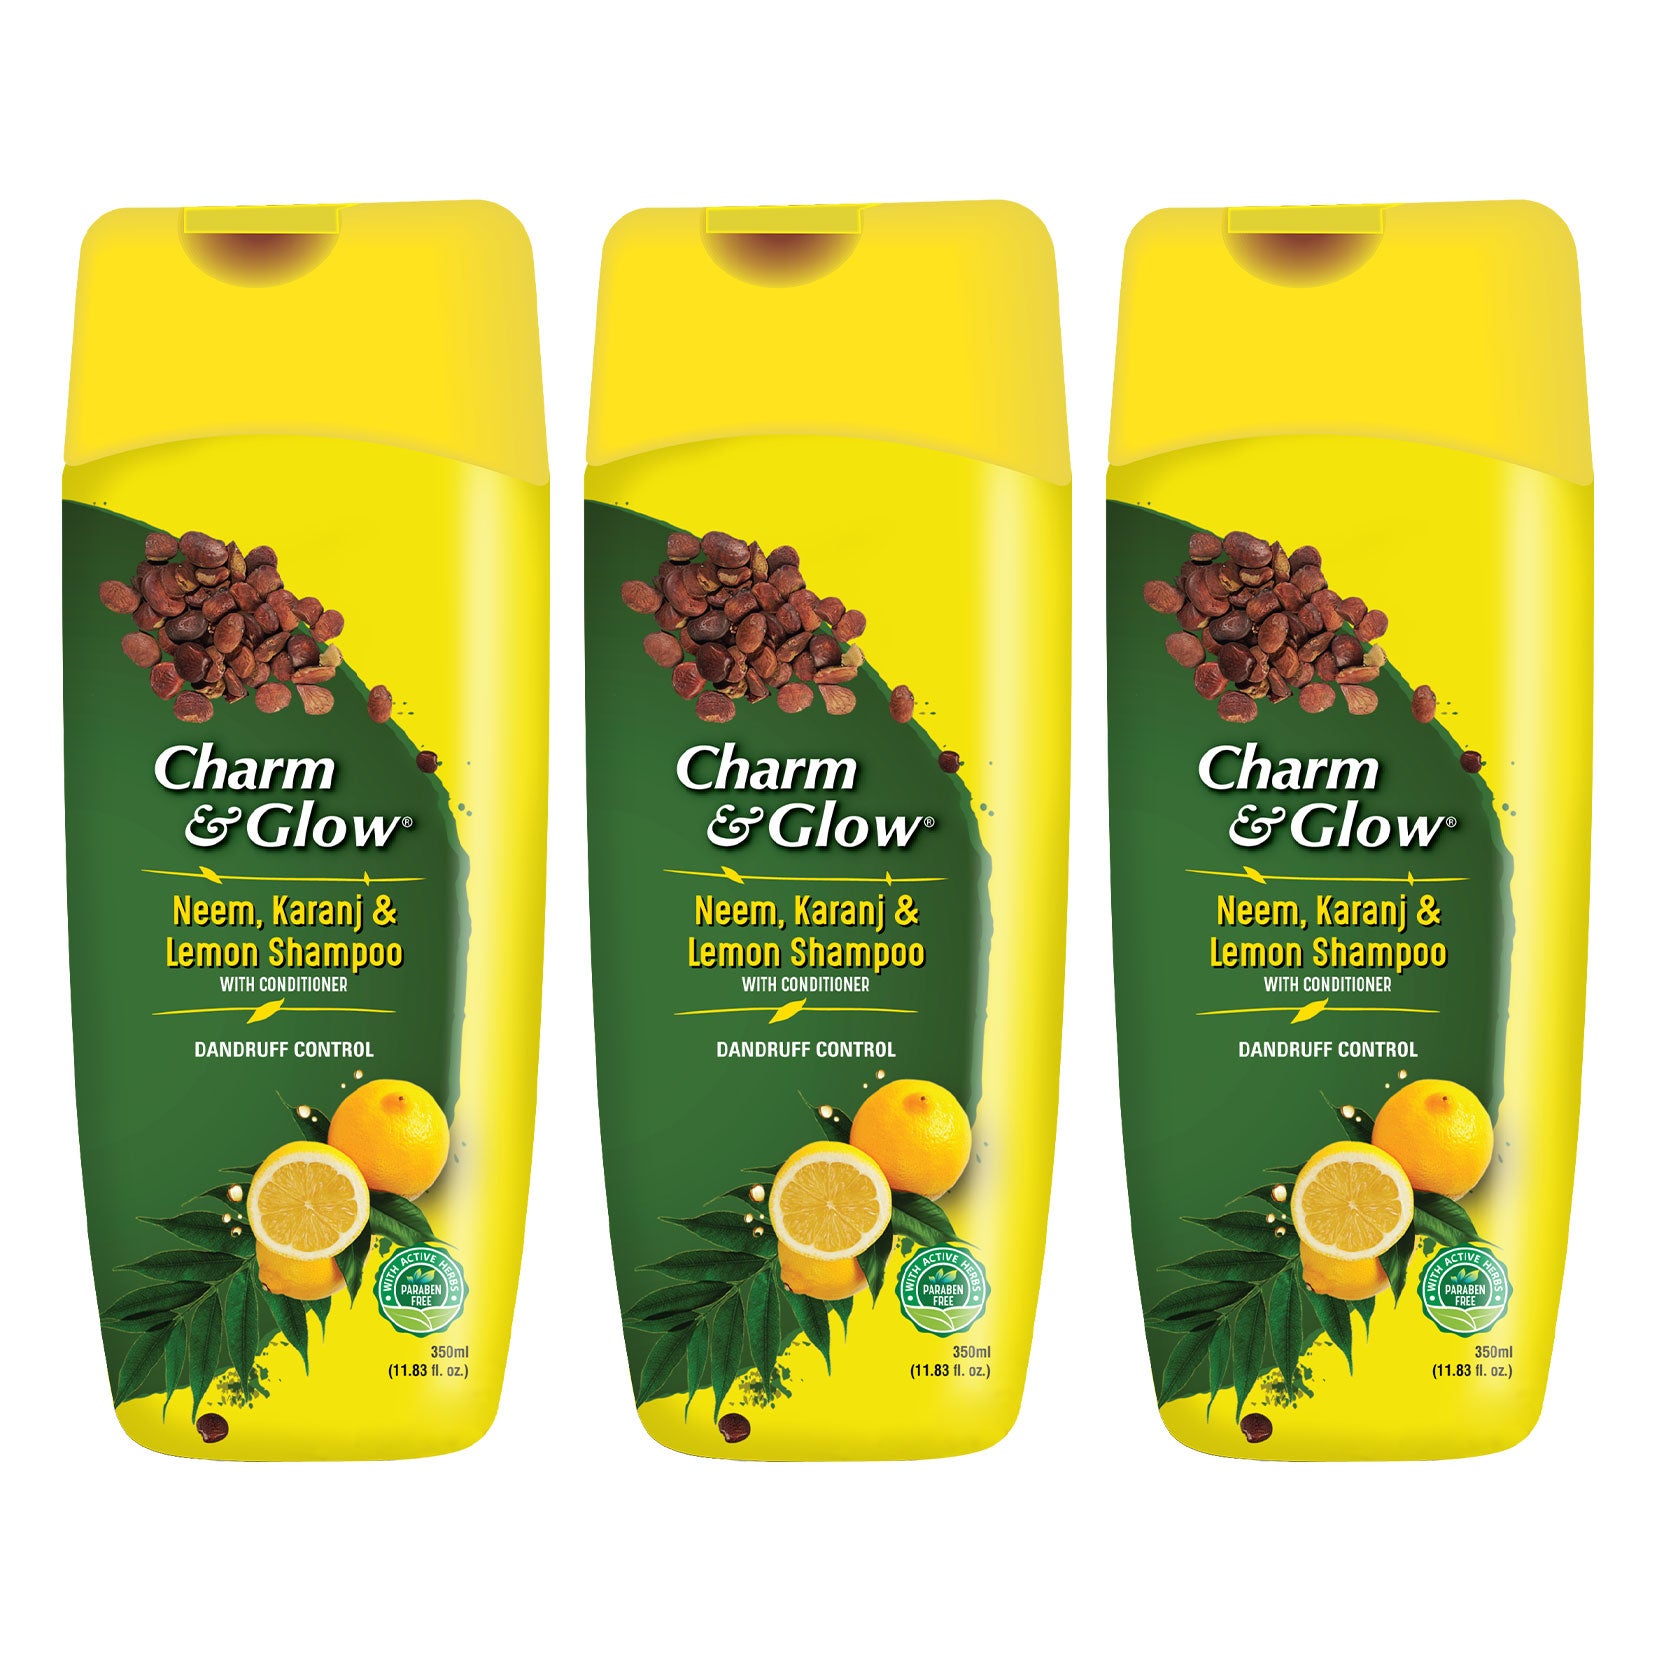 Charm & Glow Neem, Karanj & Lemon Shampoo with Conditioner for Dandruff Control Pack of 3 (350 ml x 3) - Global Plugin